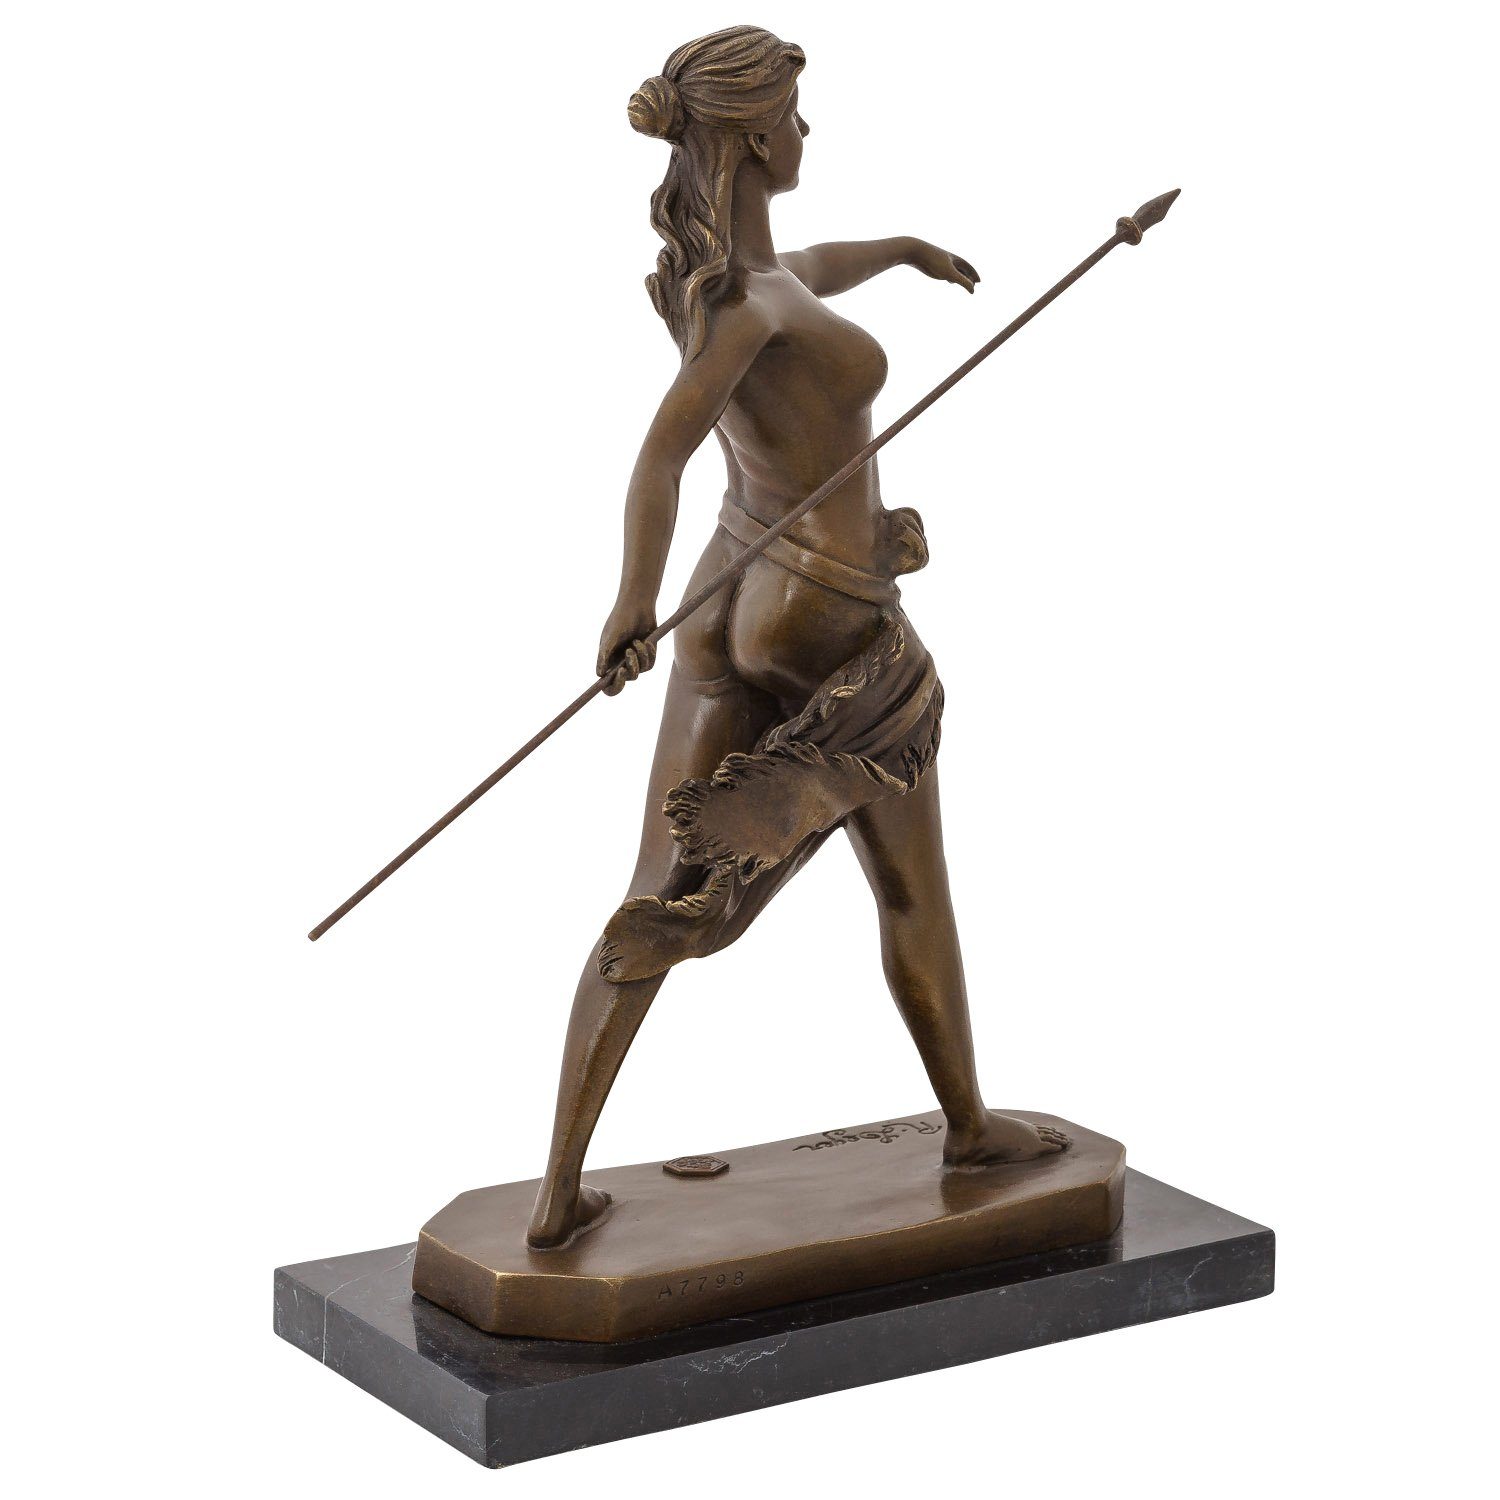 Bronzeskulptur Göttin Figur Statue Aubaho Bronze Skulptur Skulptur Antik Diana Amazone